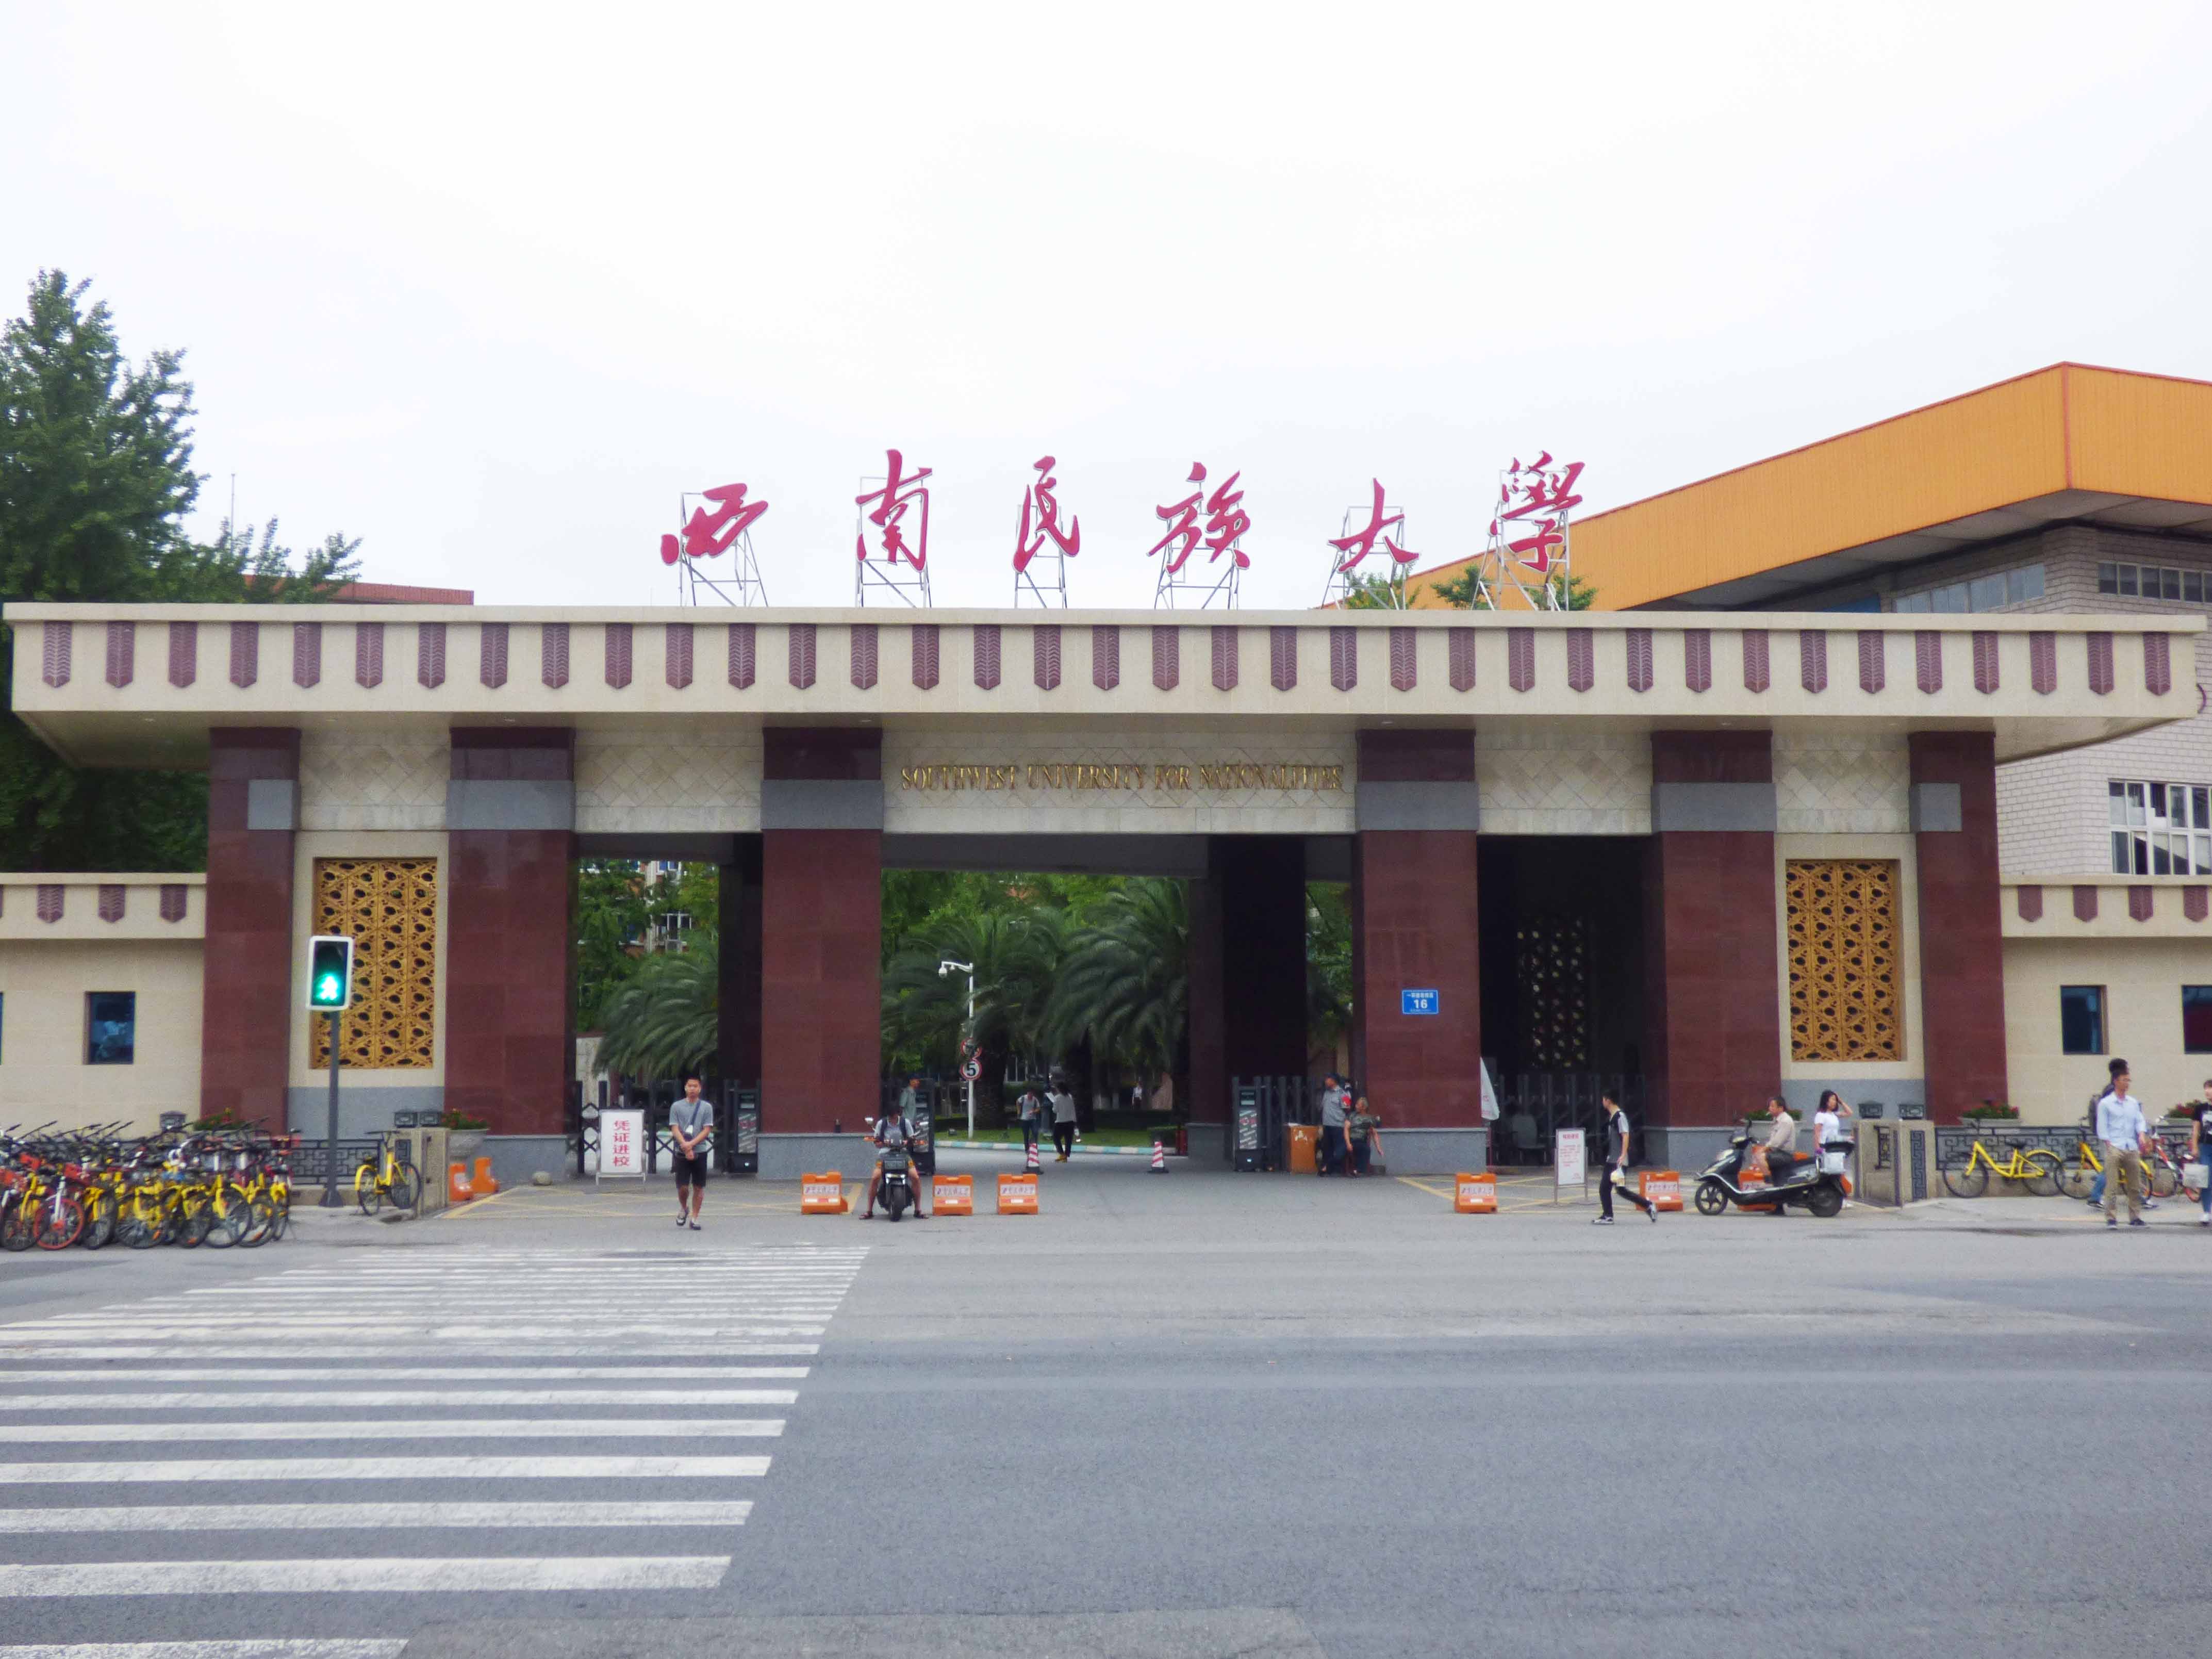 Main gate of Minzu University in Chengdu, China.